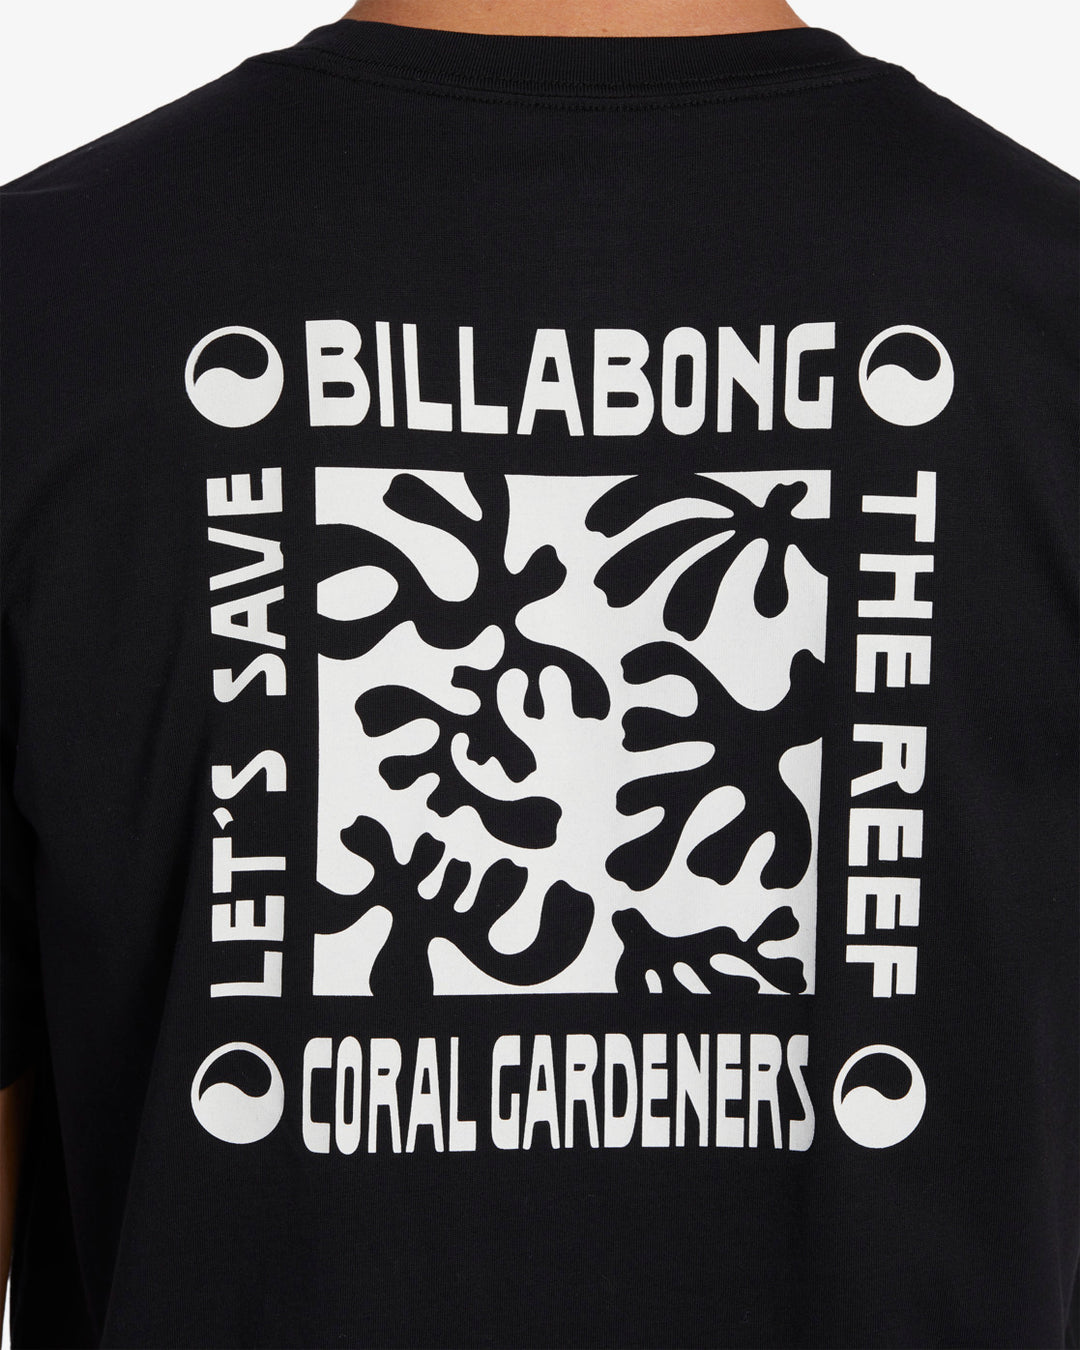 Billabong Coral Gardeners Horizon T-Shirt - Black - Sun Diego Boardshop